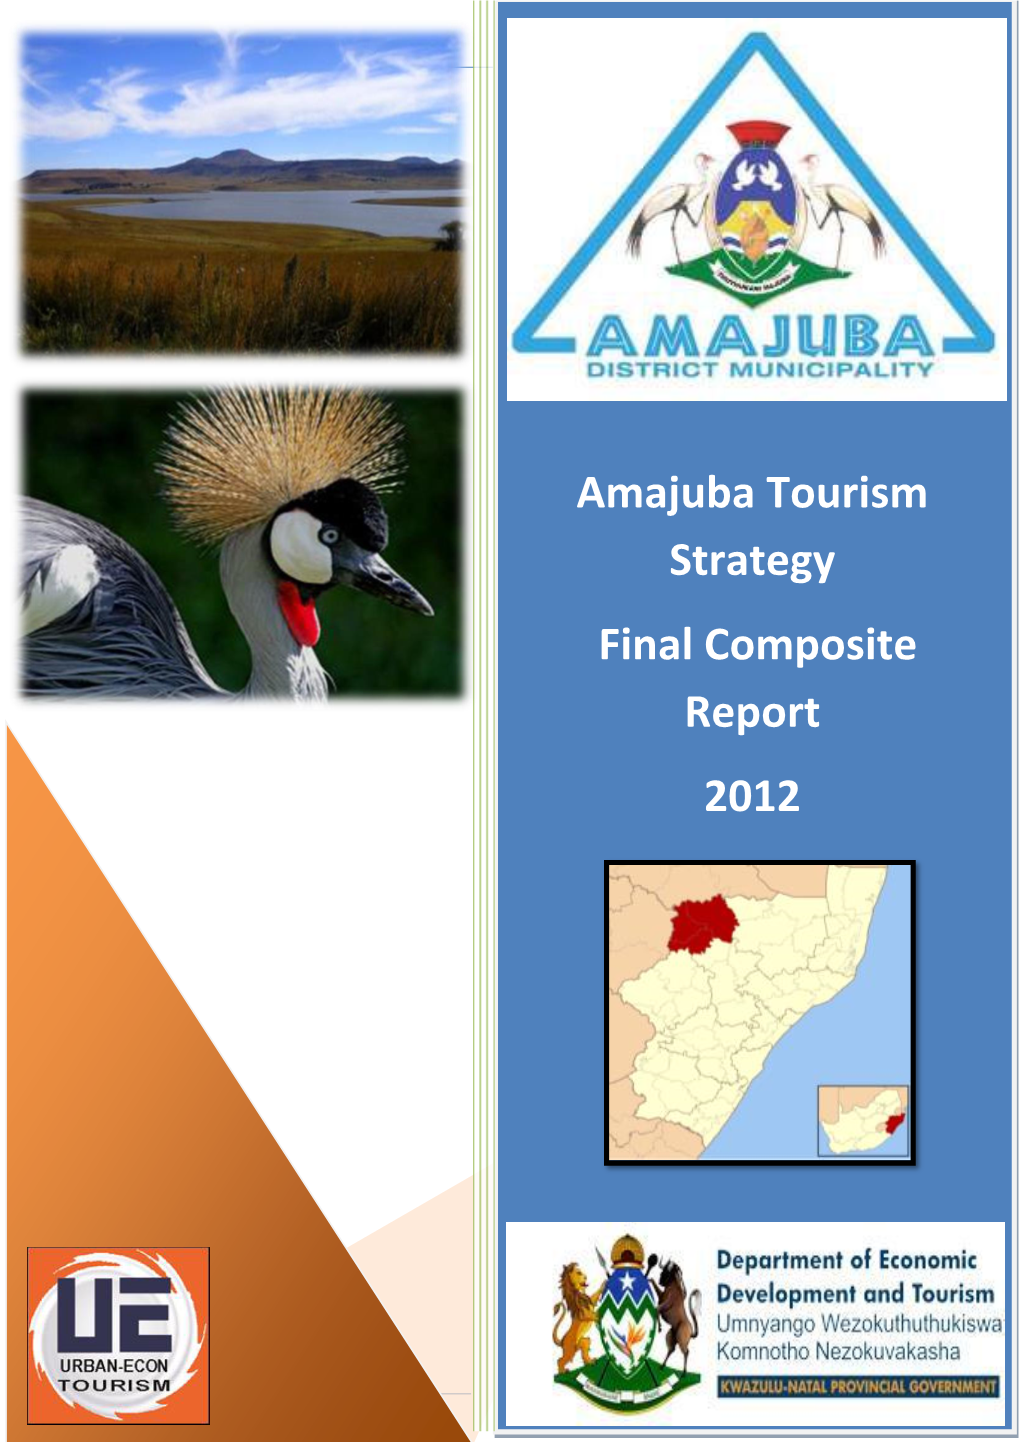 Amajuba Tourism Strategy Final Composite Report 2012